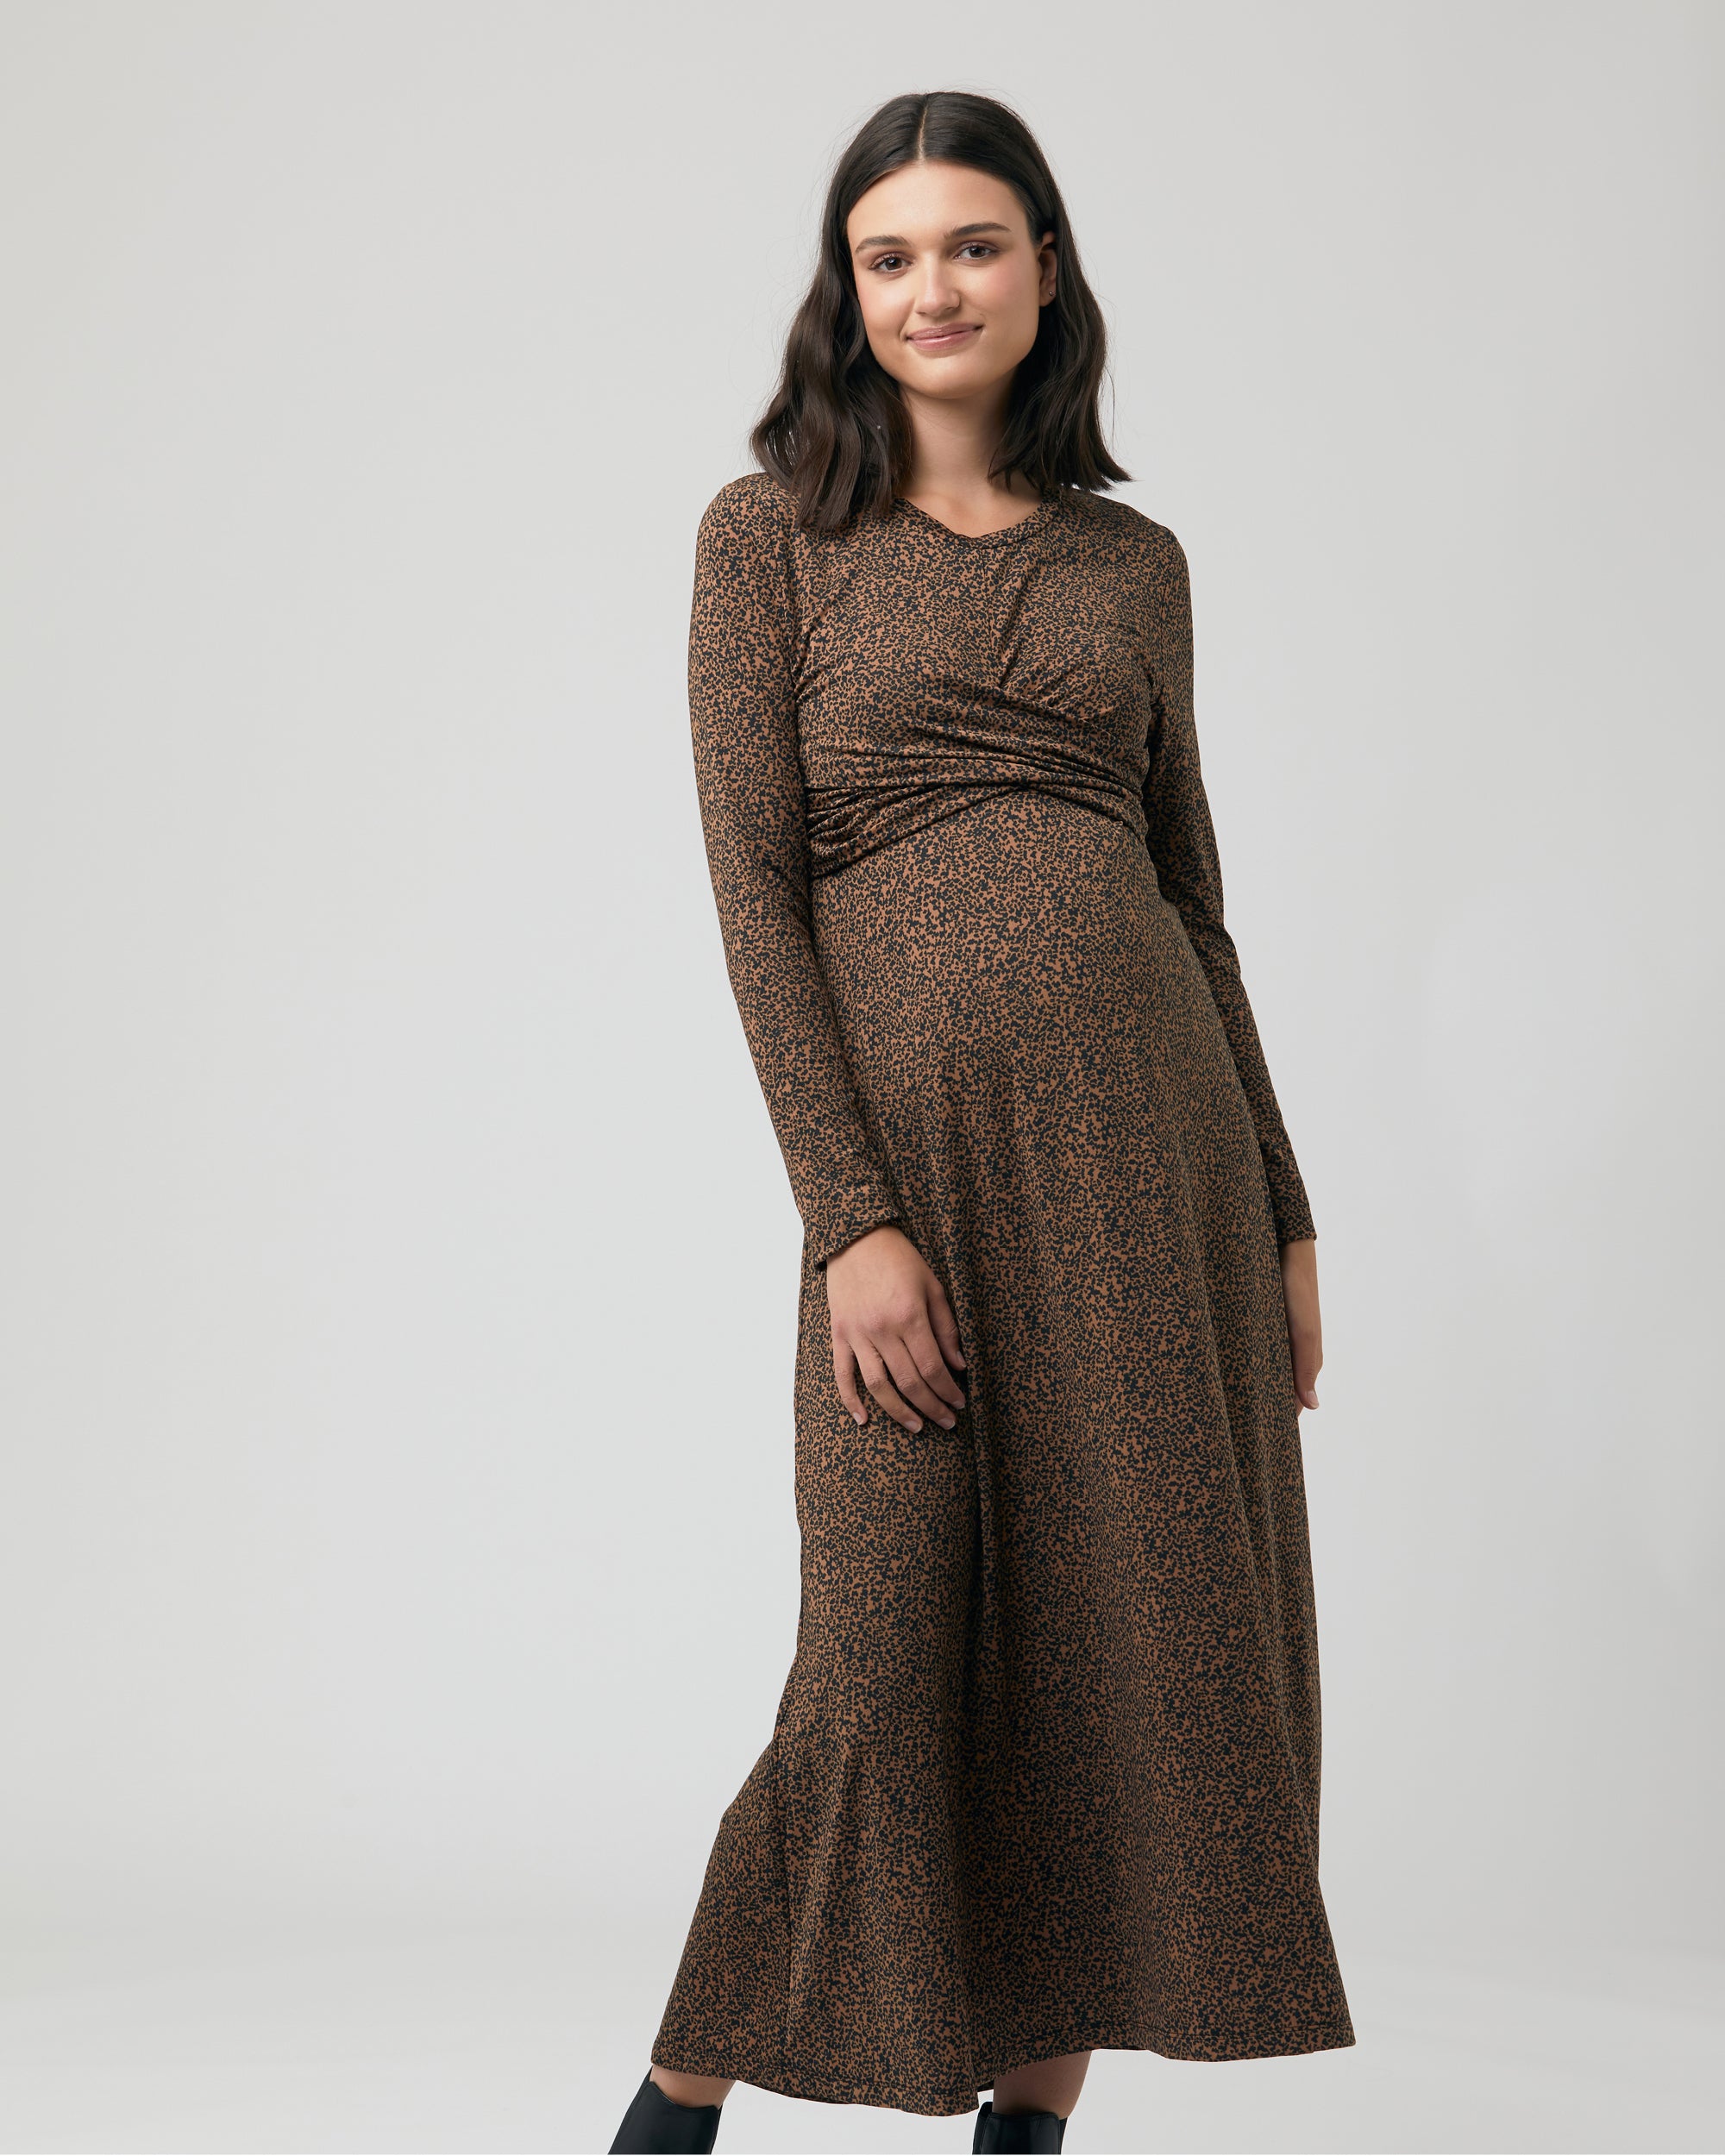 Ripe Maternity Sloane Knit Dress – CRAVINGS maternity-baby-kids